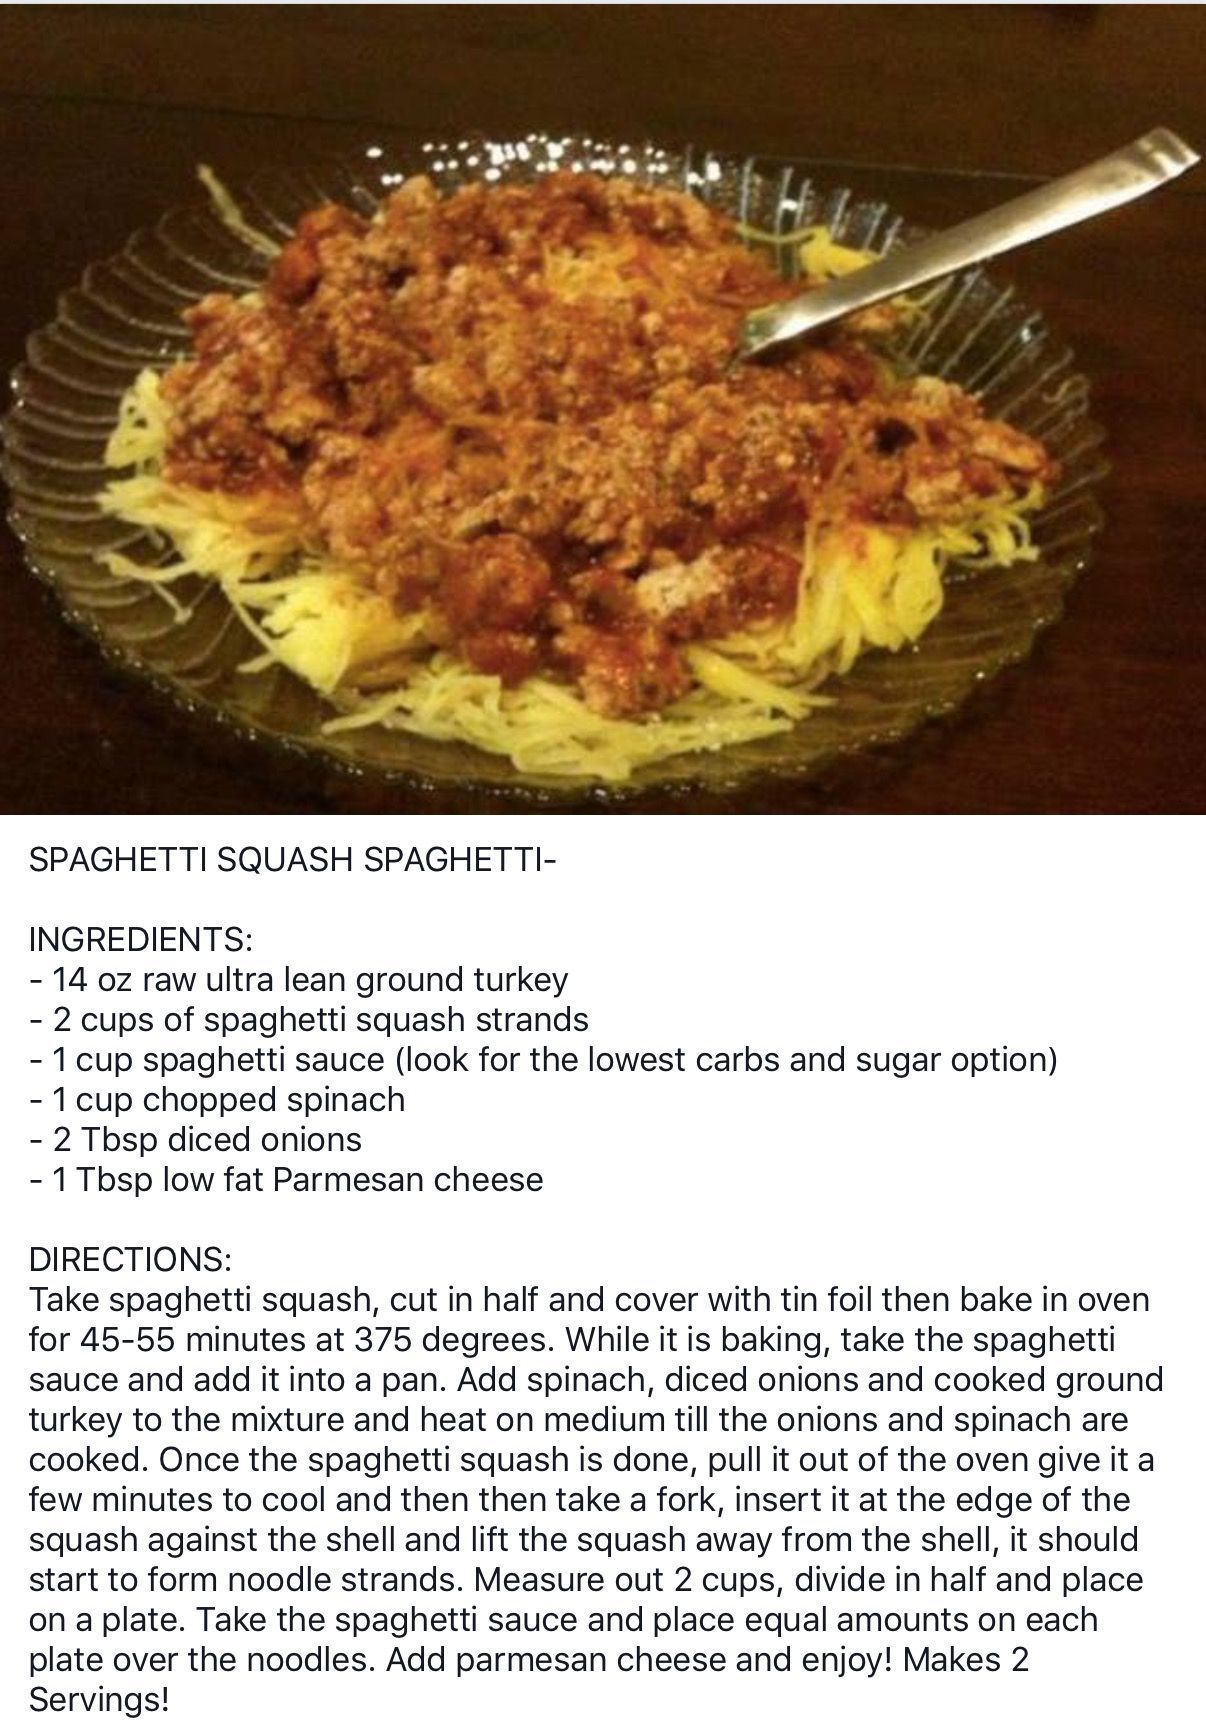 Lean and Green - Spaghetti Squash Spaghetti -   24 green spaghetti recipes
 ideas